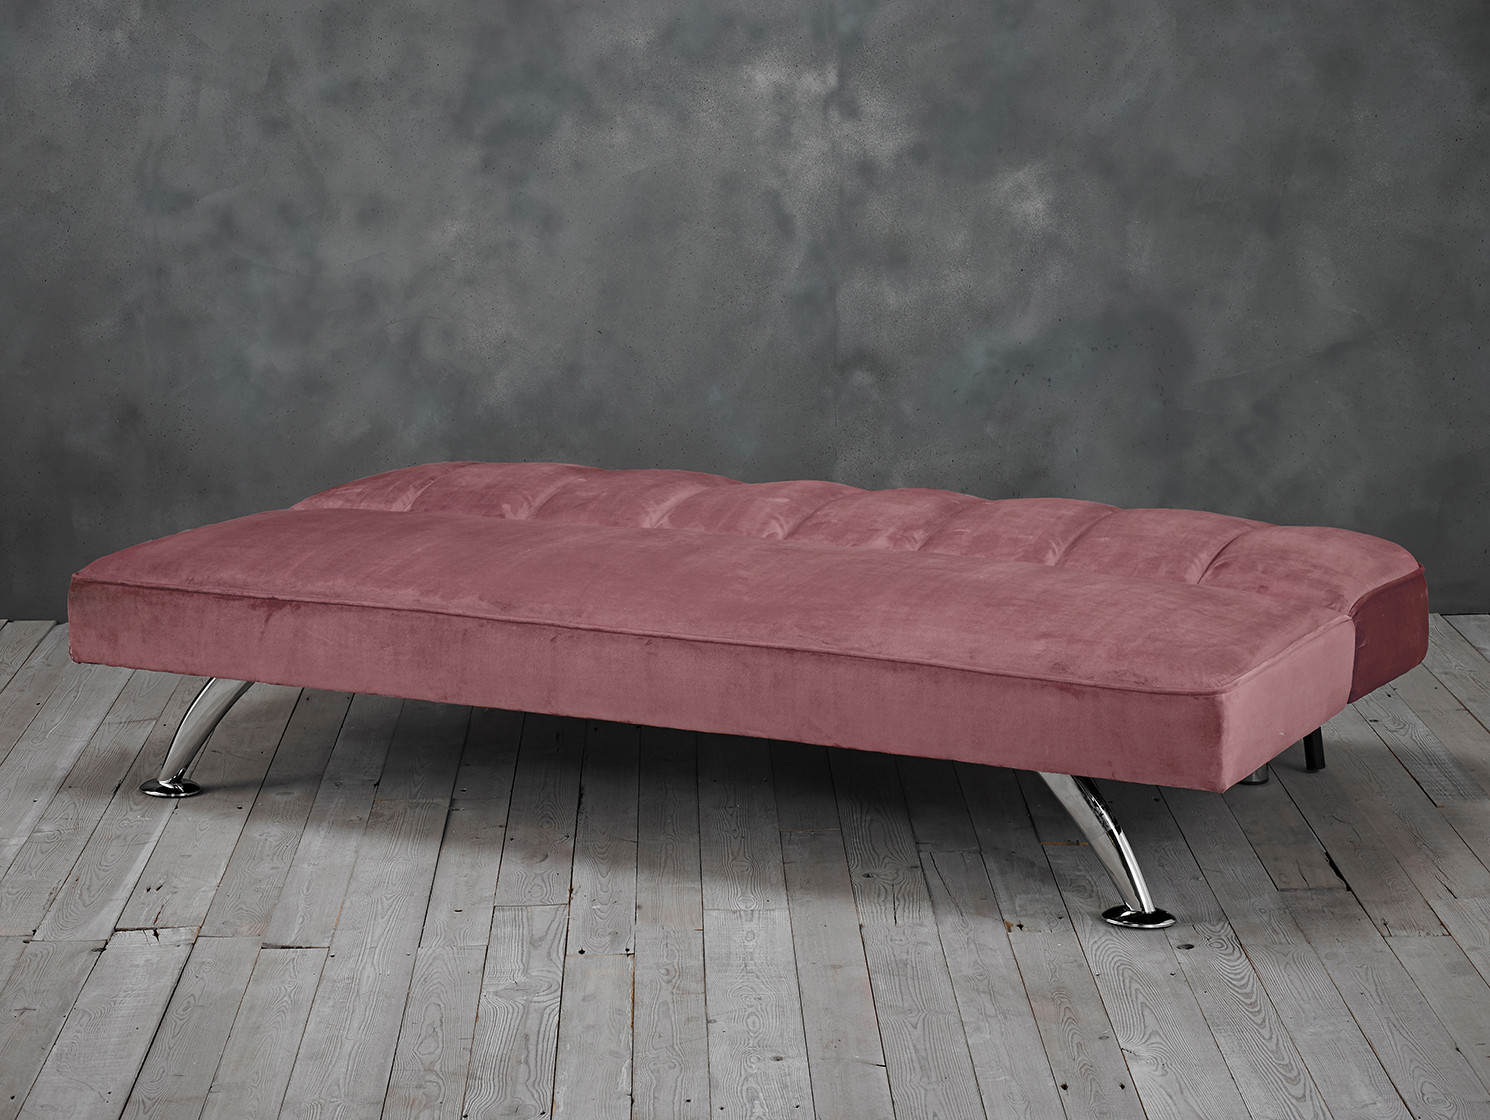 Brighton Sofa Bed Pink